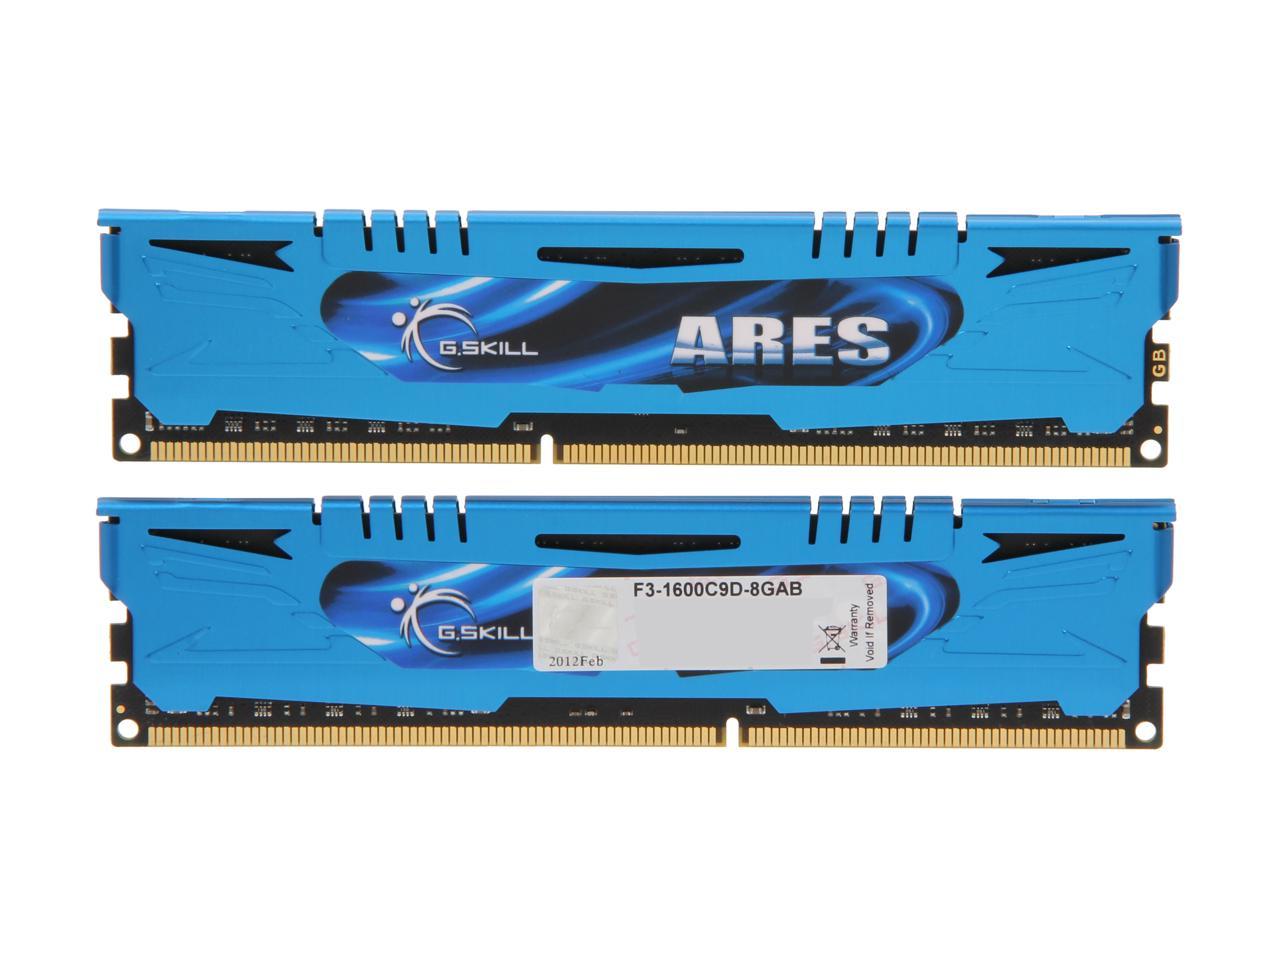 G.SKILL Ares Series 8GB (2 x 4GB) 240-Pin DDR3 SDRAM DDR3 1600 (PC3 12800) Desktop Memory Model F3-1600C9D-8GAB